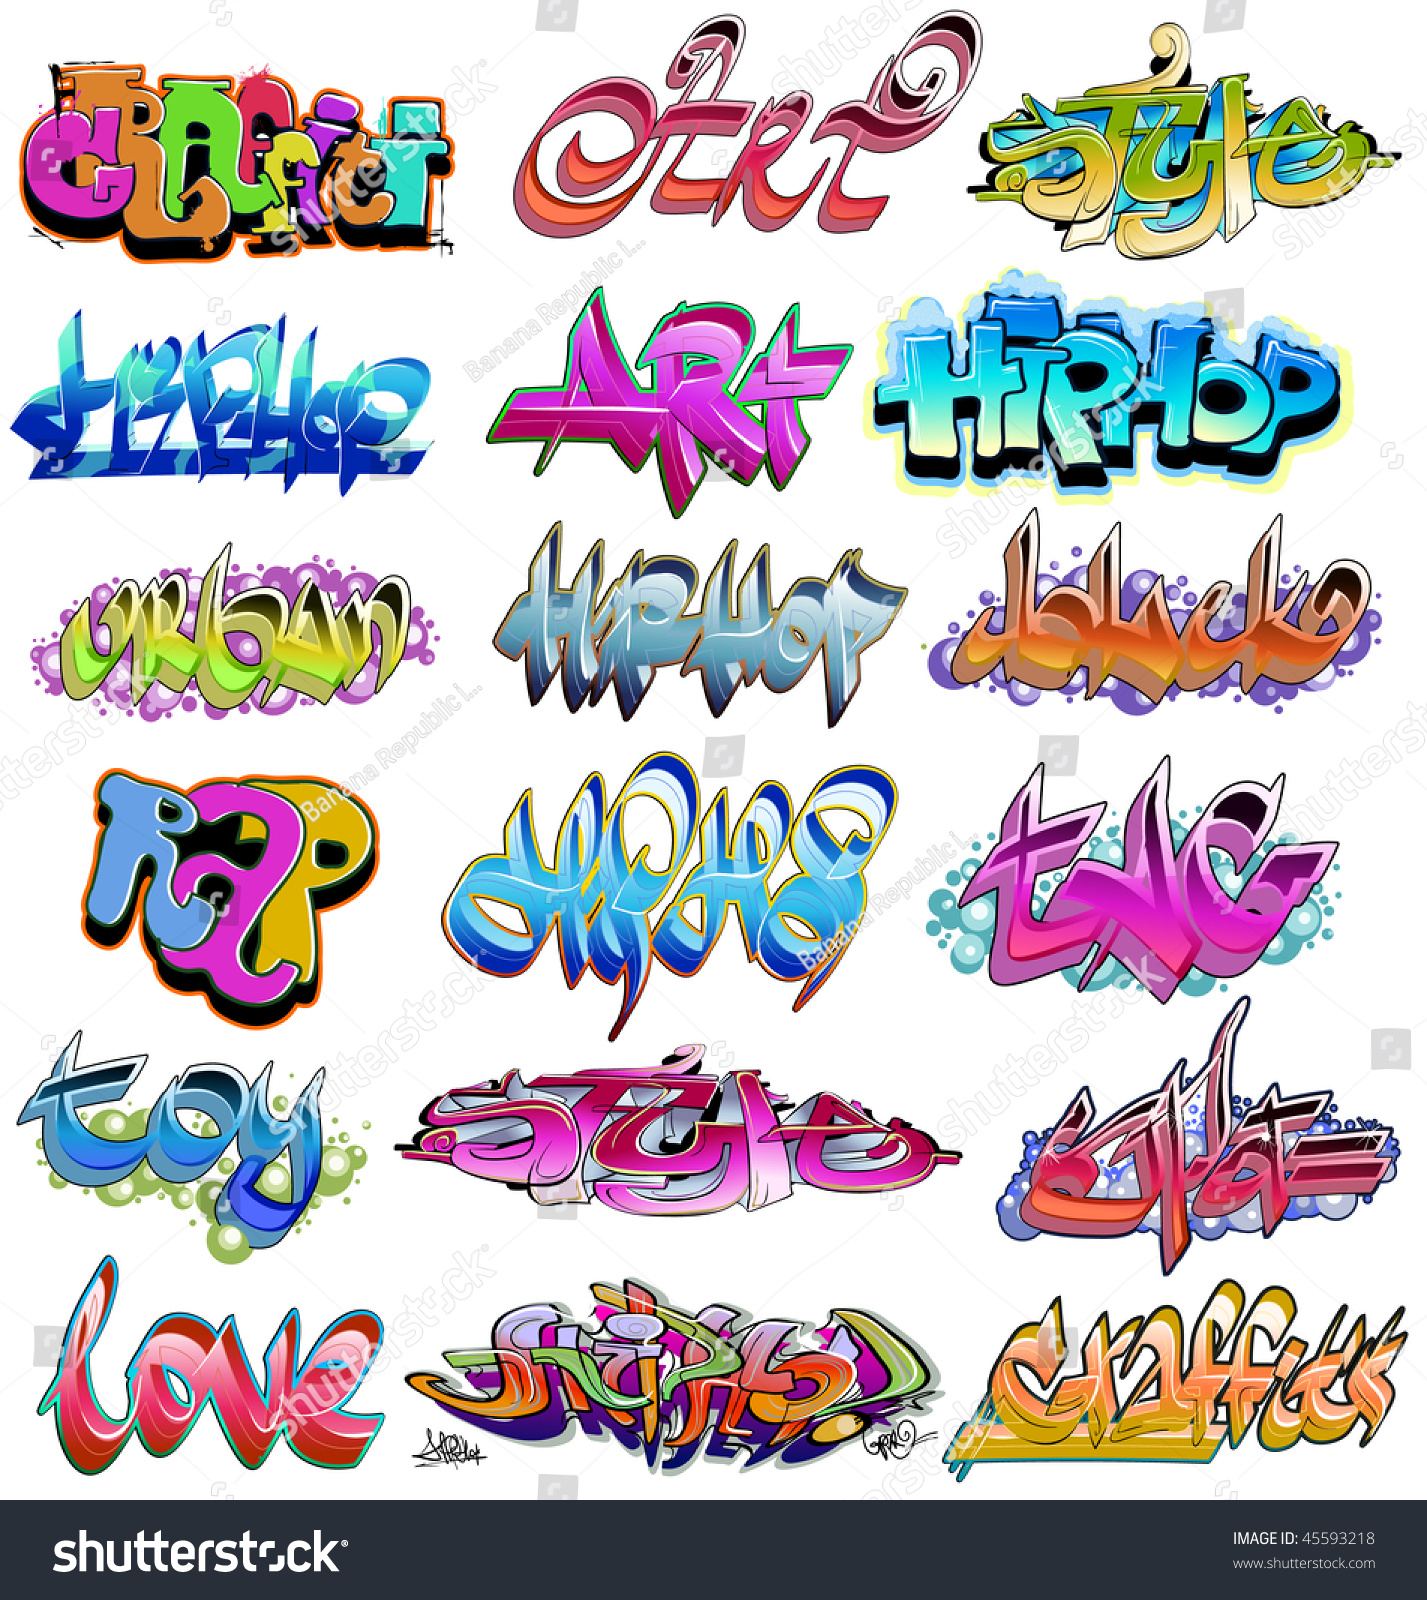 Граффити алфавит хип хоп стиль